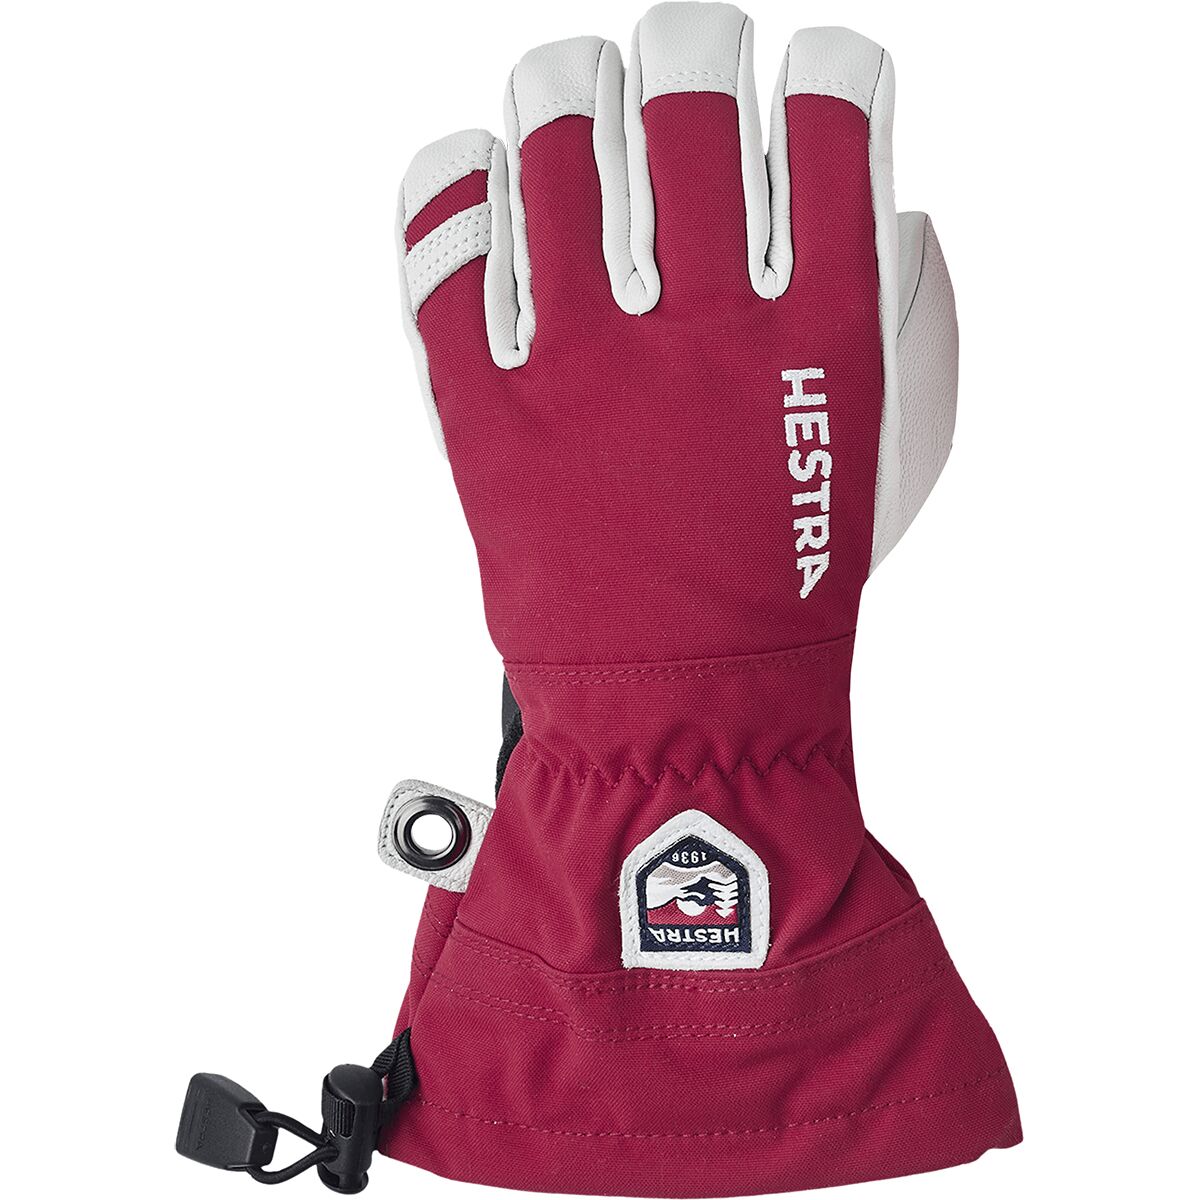 Hestra Heli Ski Junior Glove - Kids'